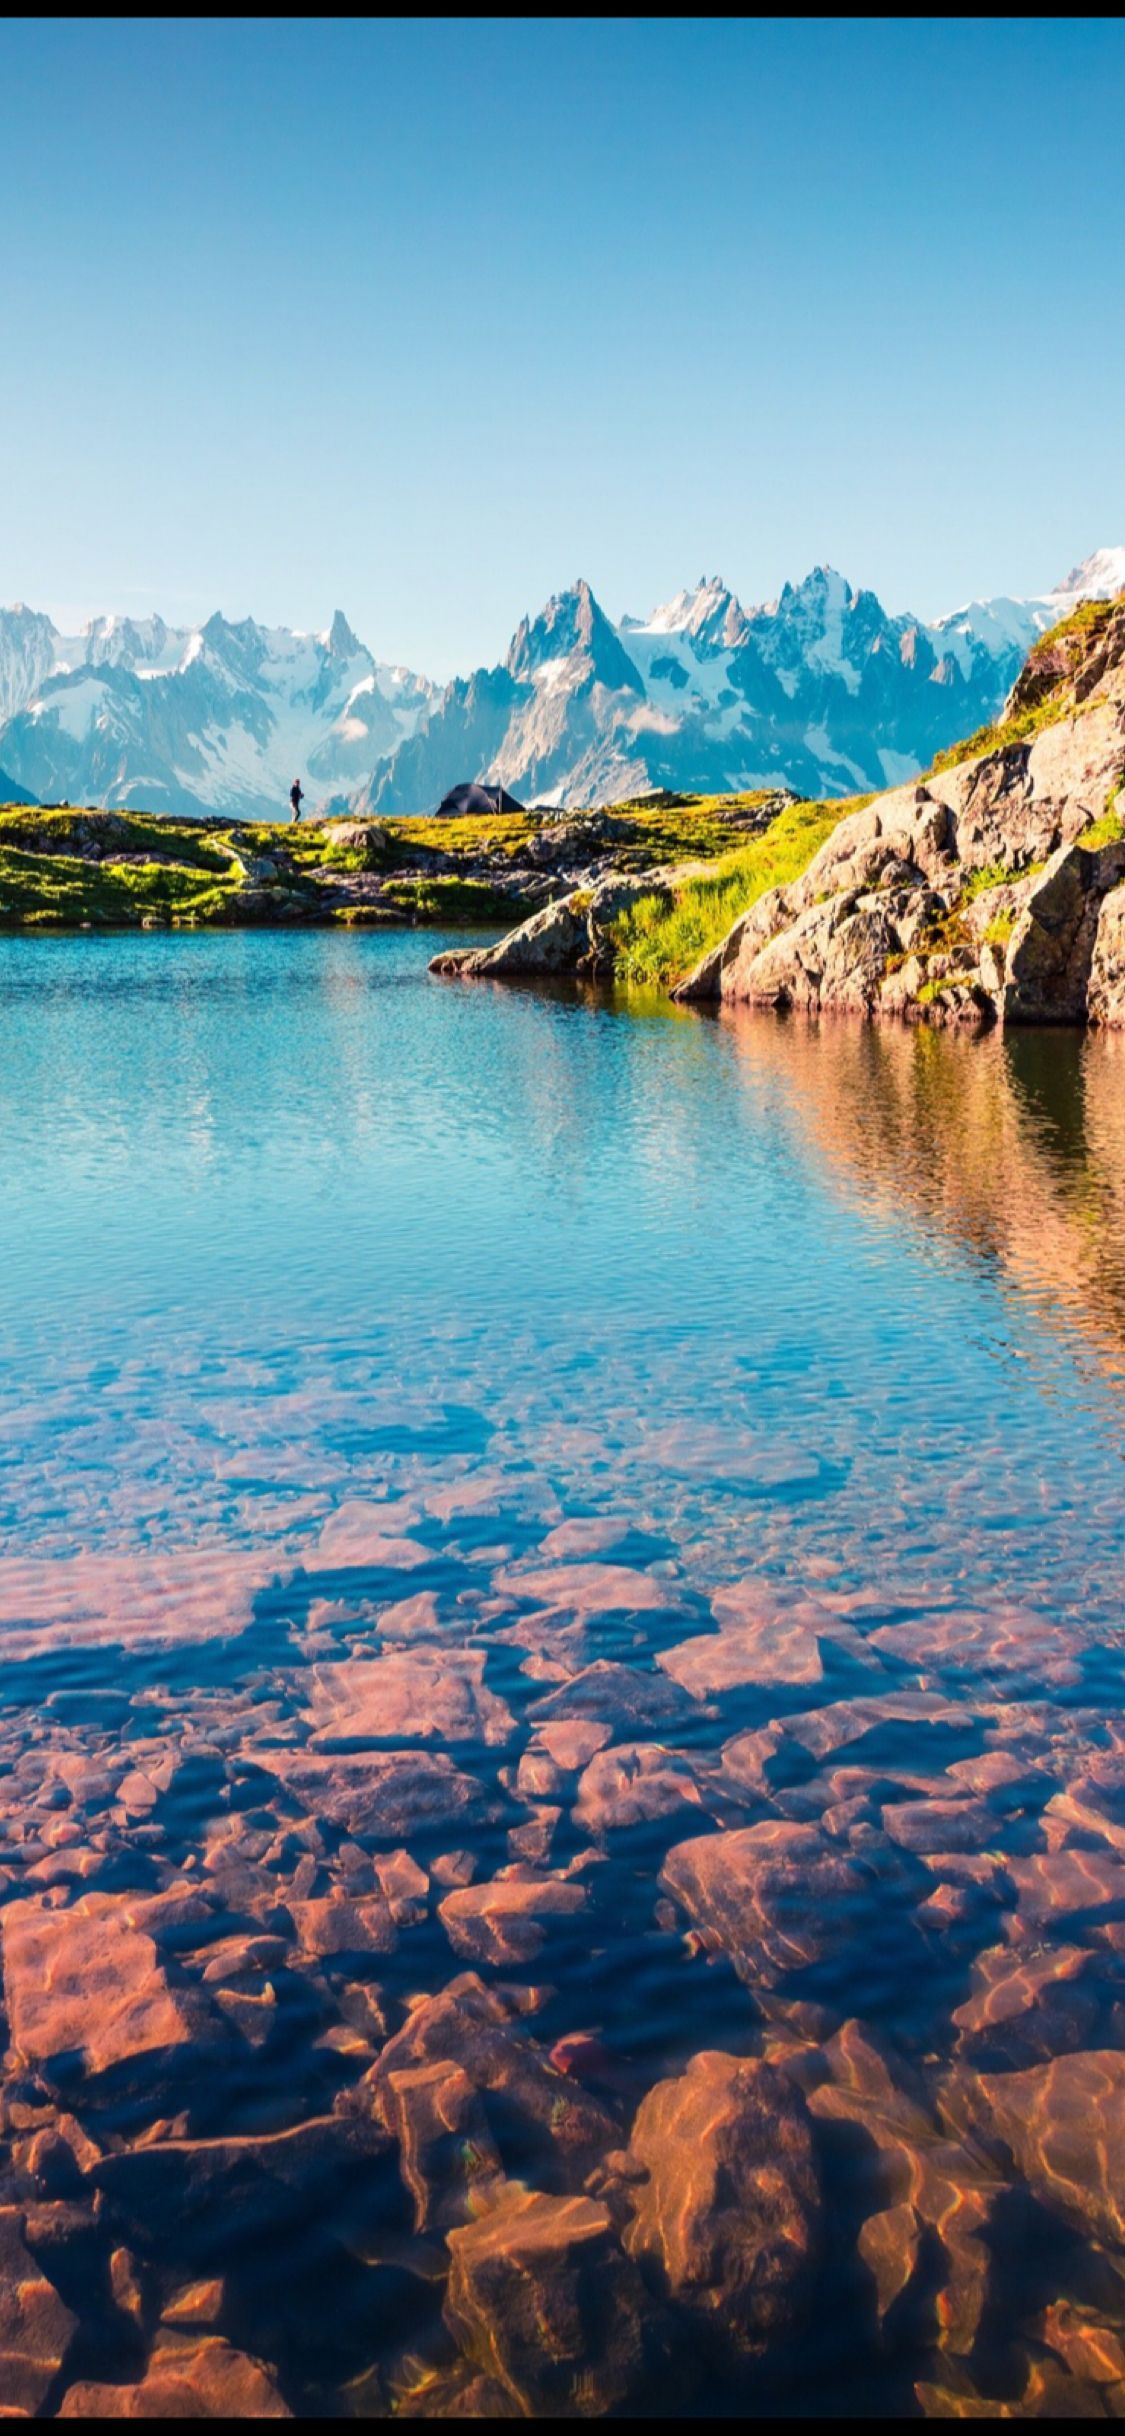 The mountainous lake of peace. Summer wallpaper, Nature wallpaper, Wallpaper iphone summer